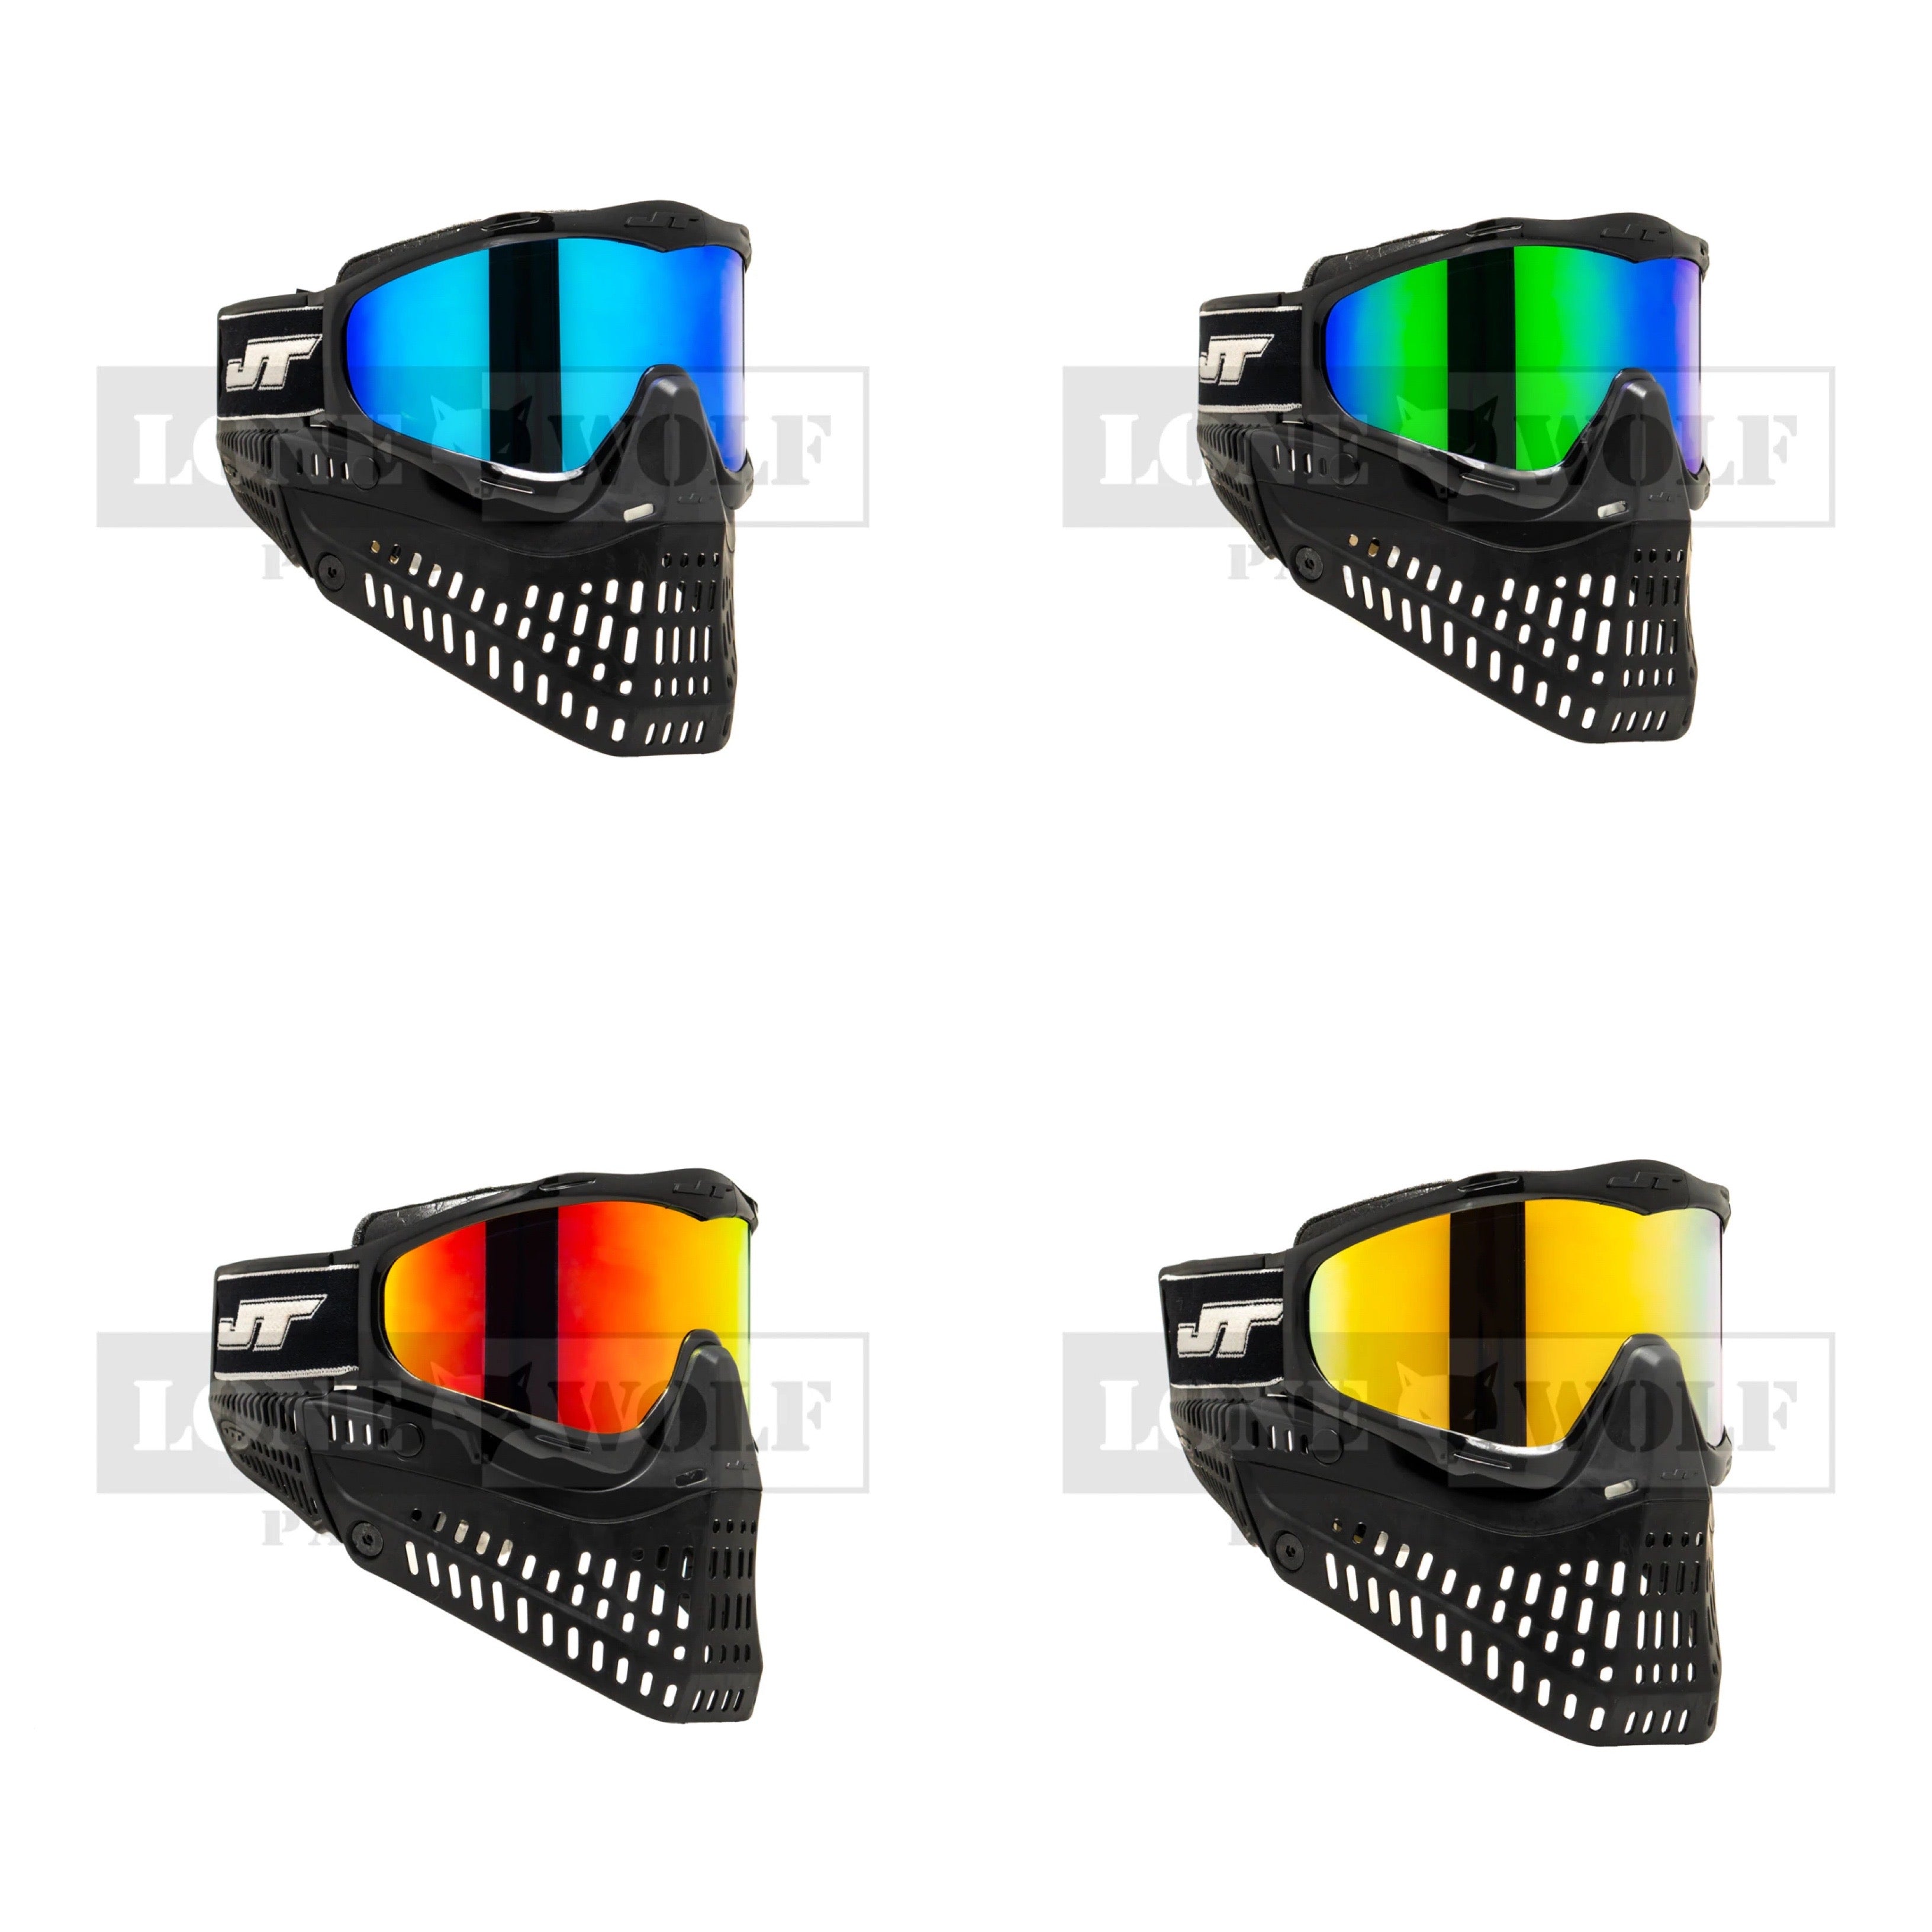 JT Spectra Flex 8 Thermal Full Coverage Goggles, Camo, Clear